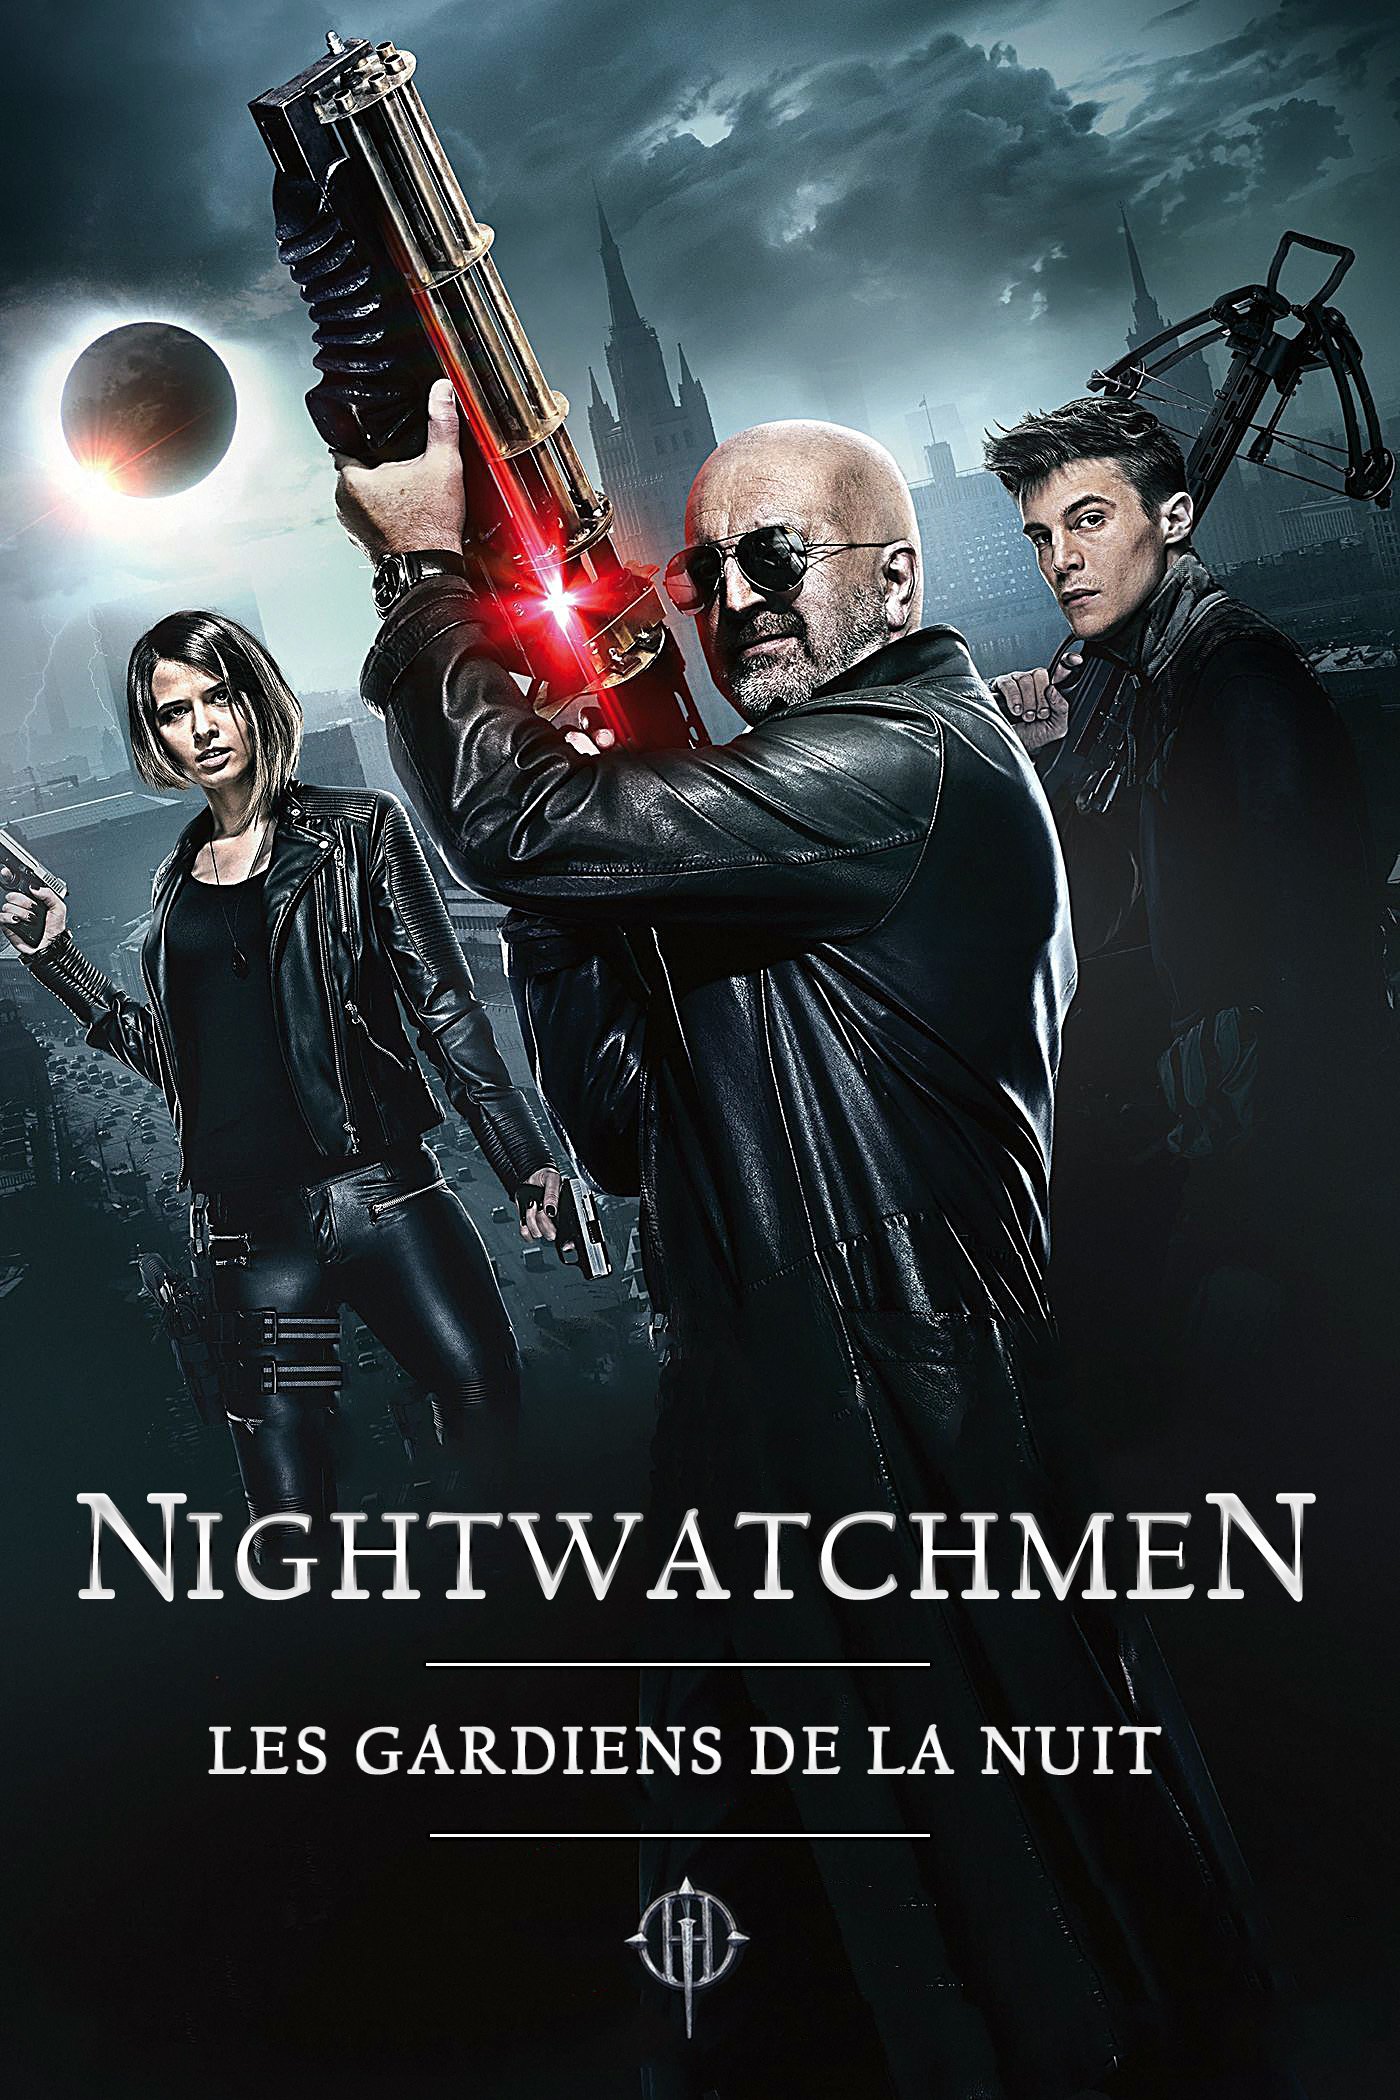 Nightwatchmen, les gardiens de la nuit